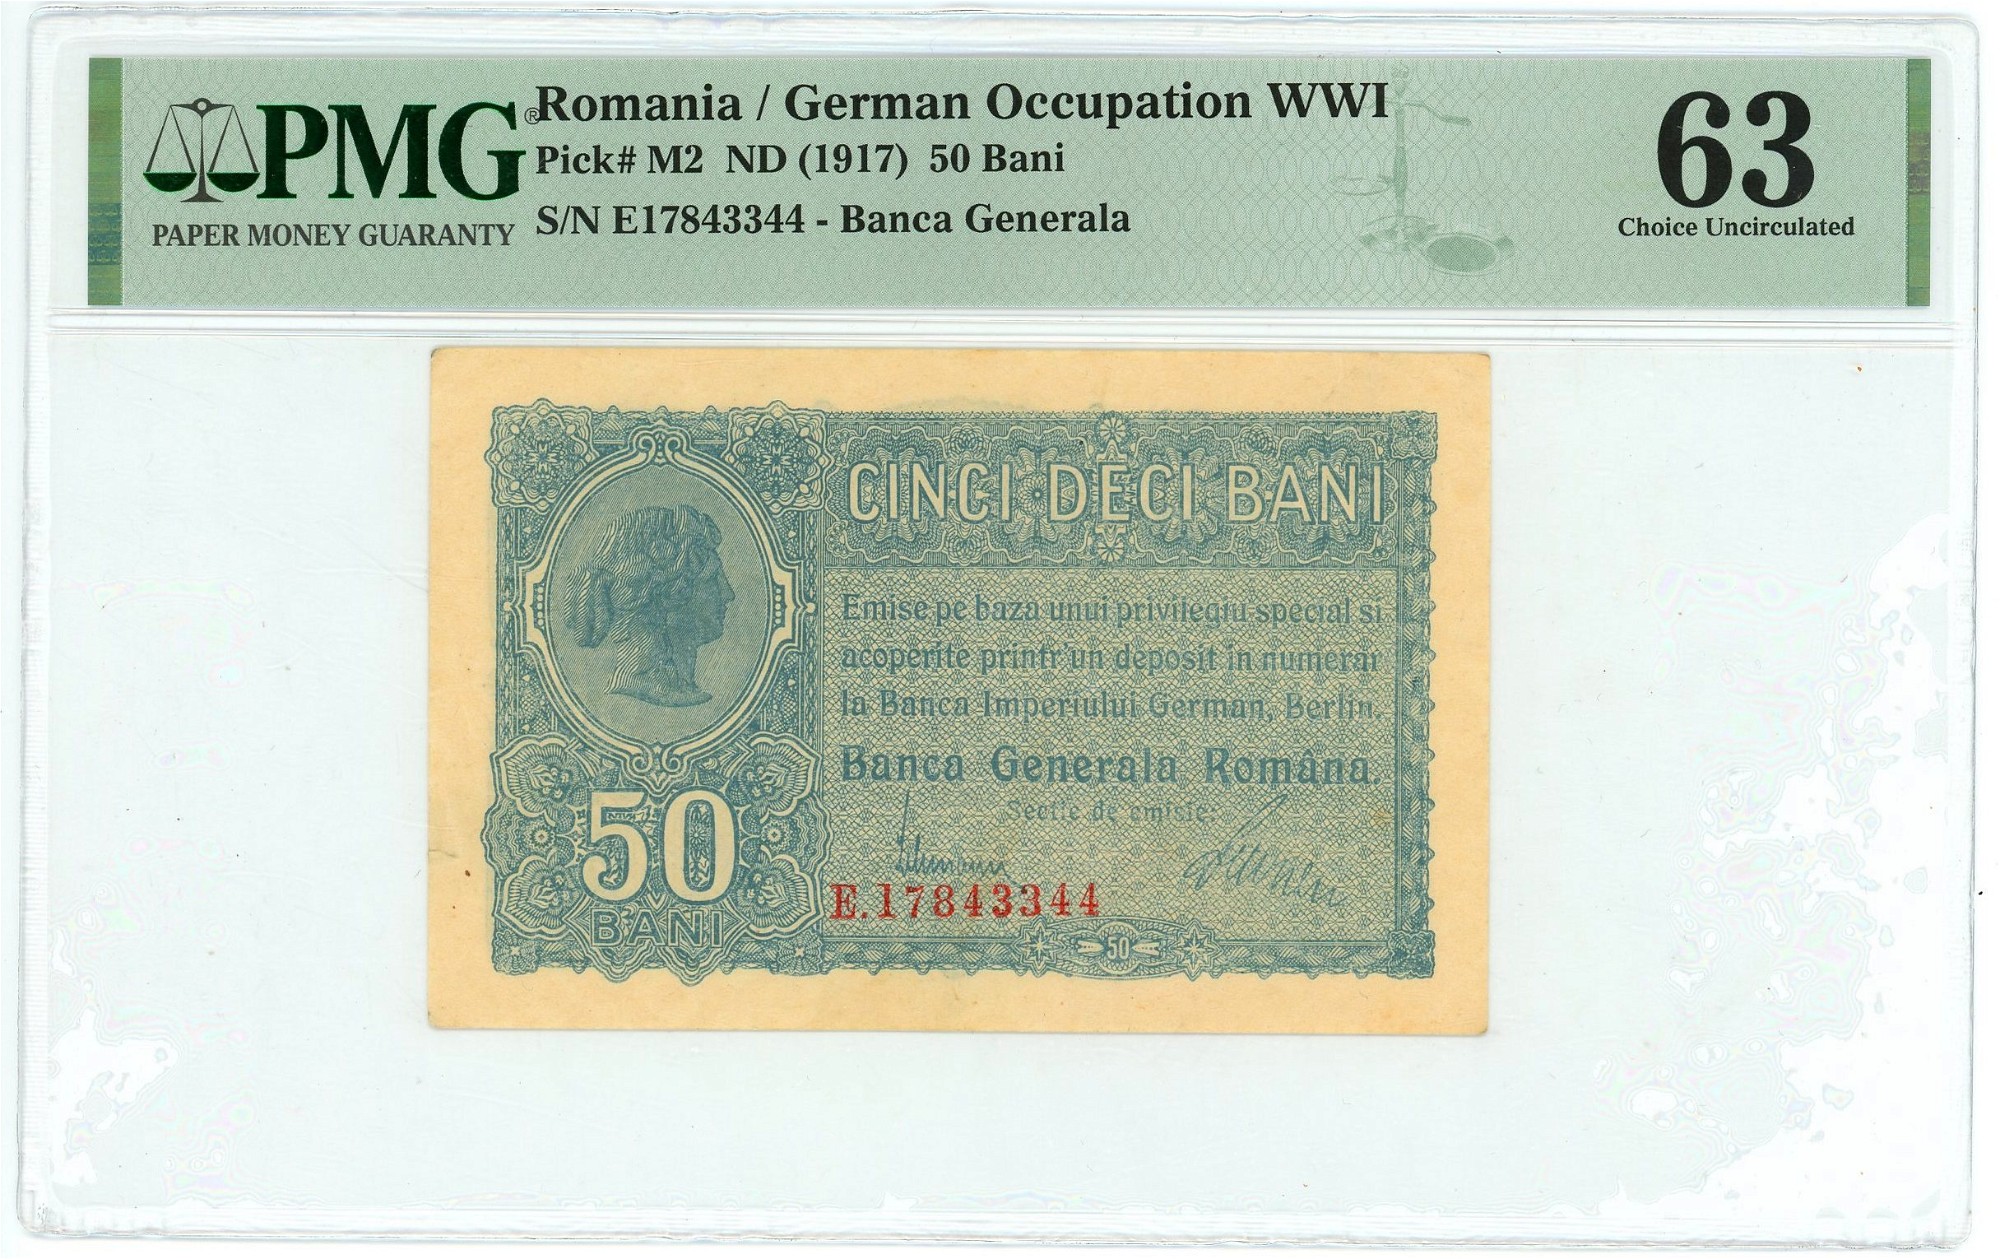 Romania 50 Bani 1937 (1917) (ND) PMG 63 EPQ Choice UNC | Katz Auction